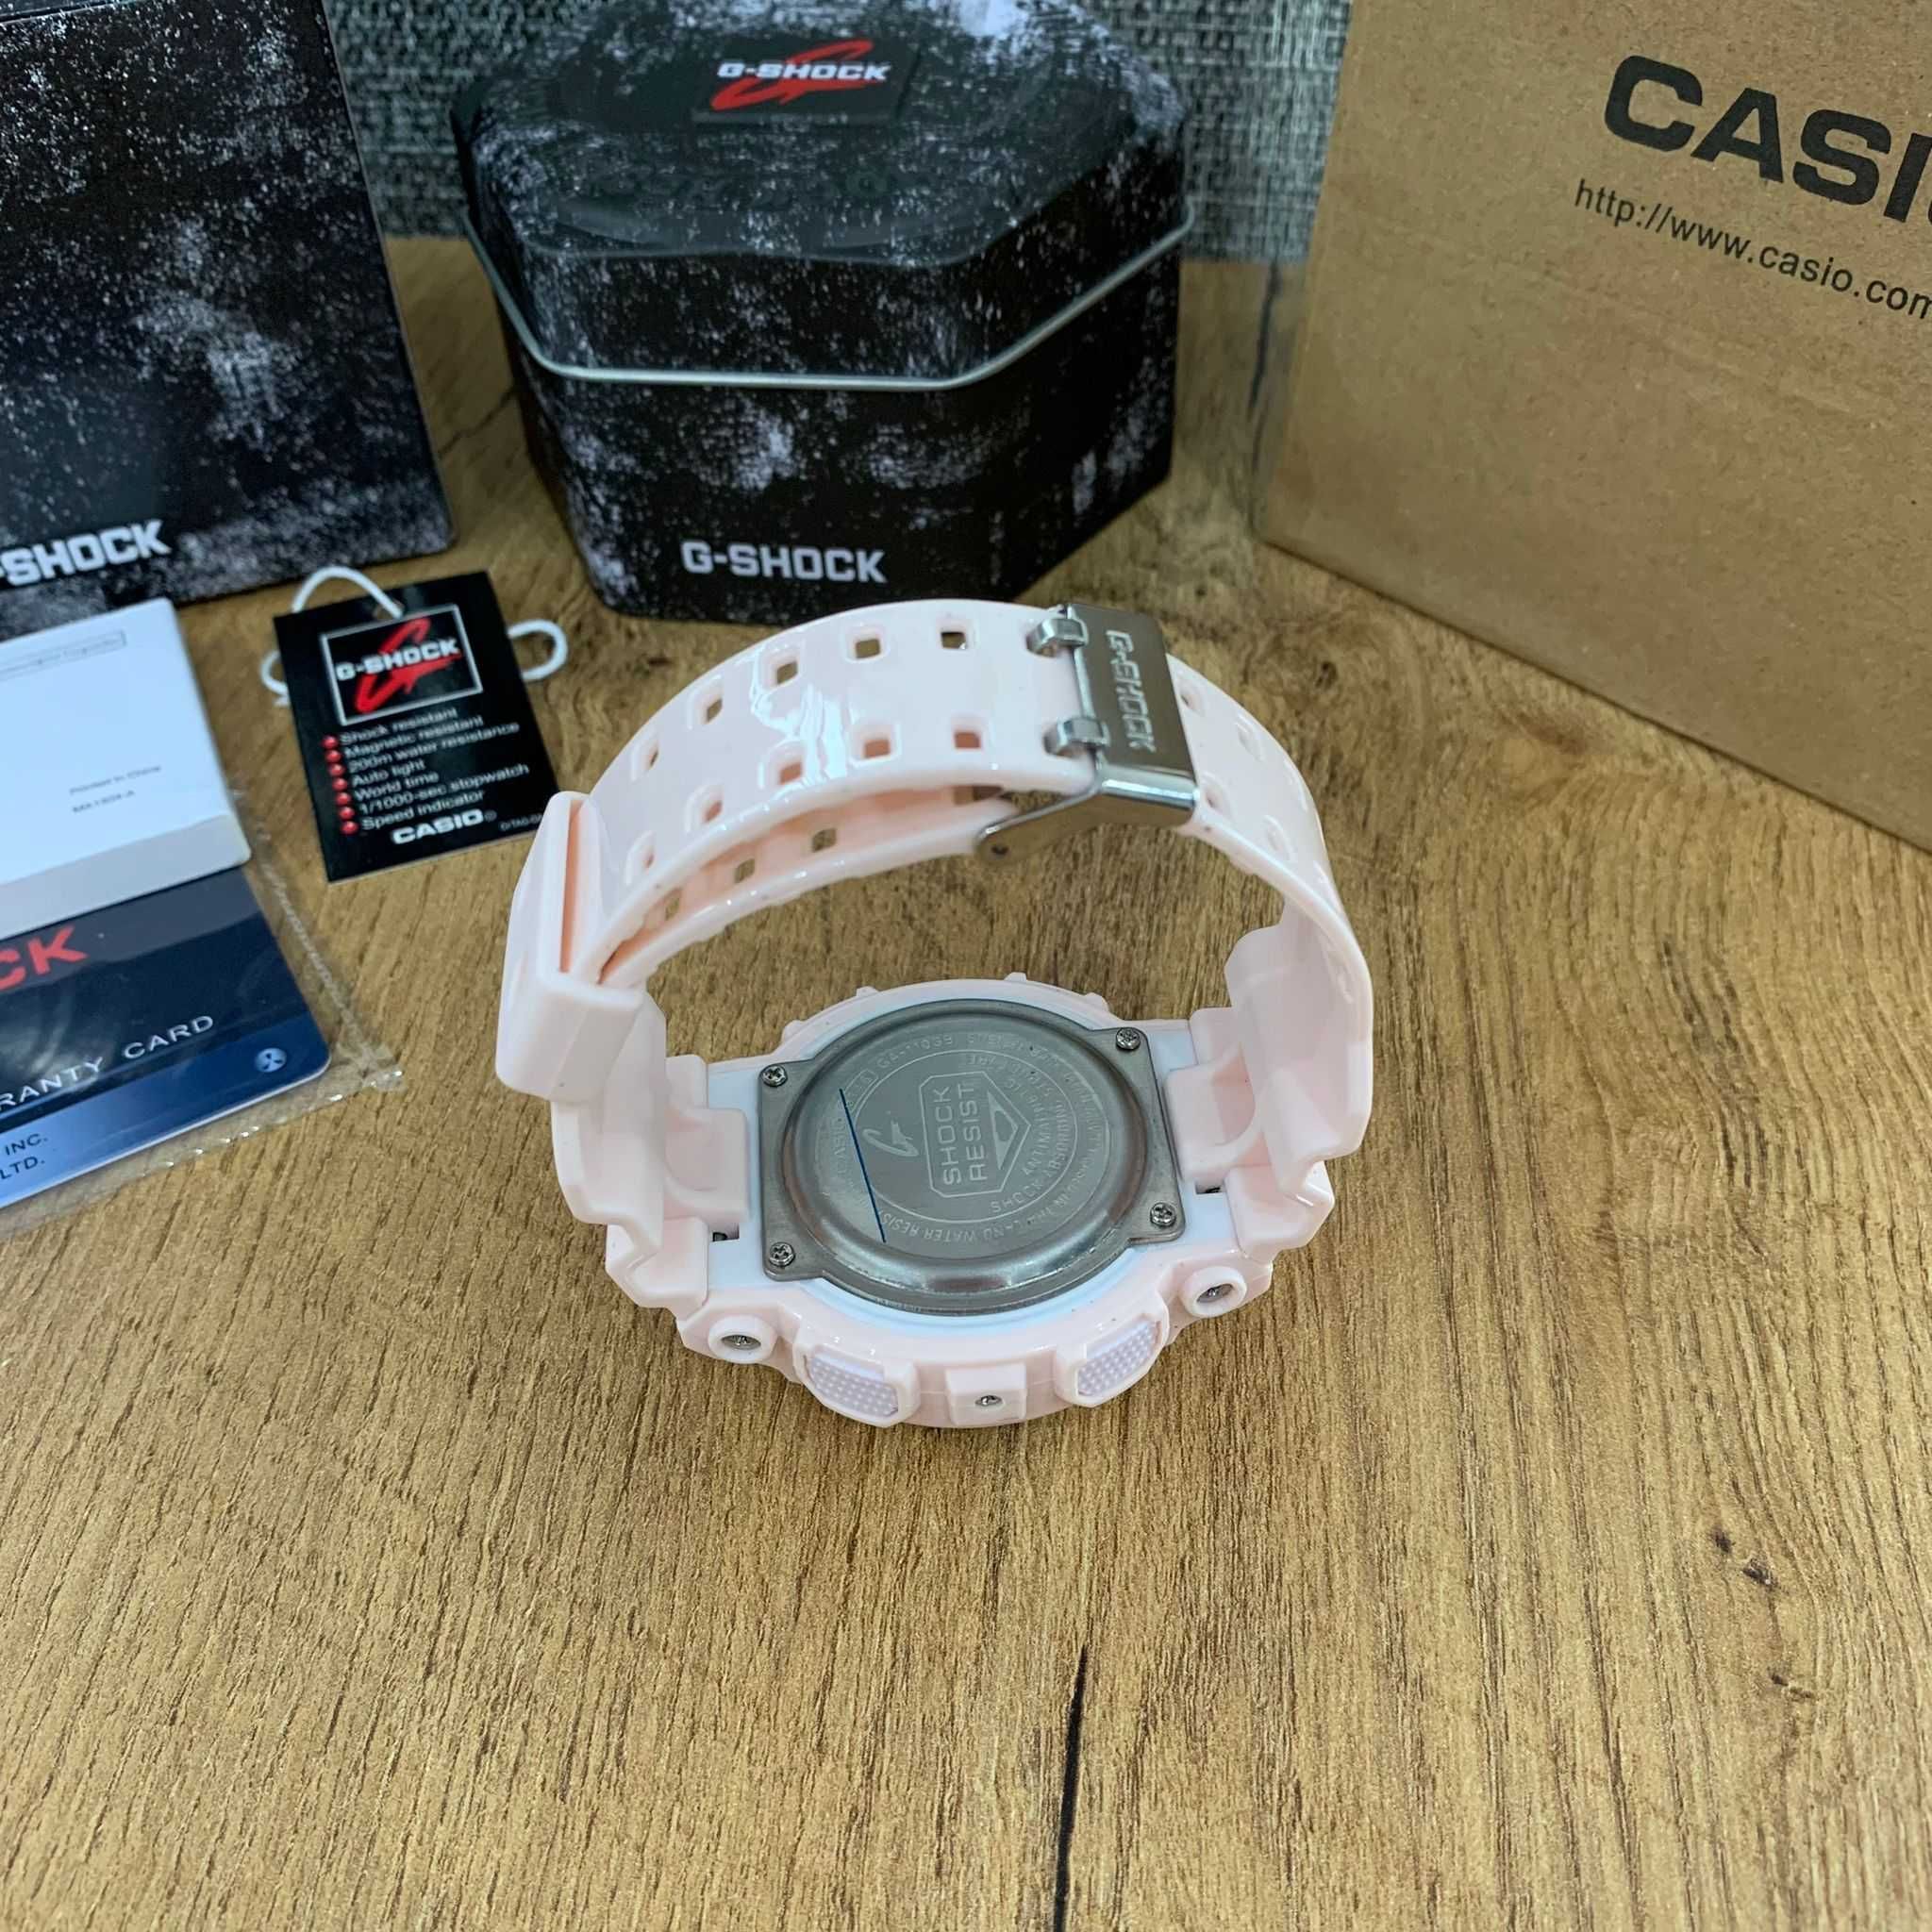 Damski Zegarek Casio G-Shock GA-110 Kremowy Róż